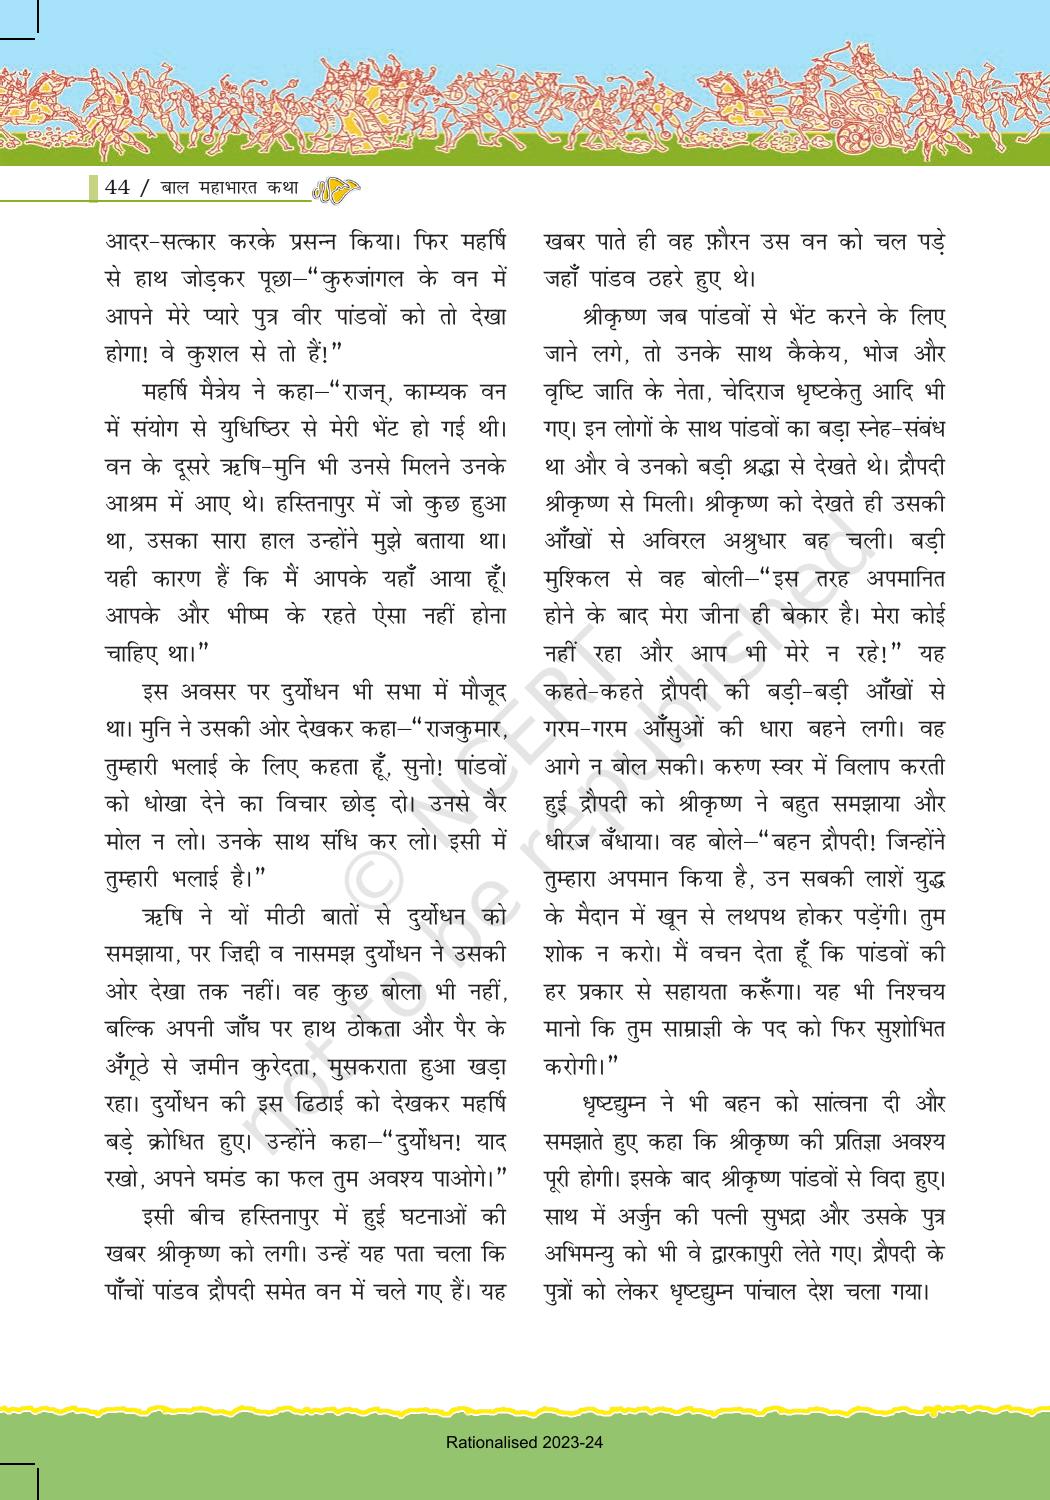 NCERT Book for Class 7 Hindi: Chapter 1-बाल महाभारत कथा - Page 44